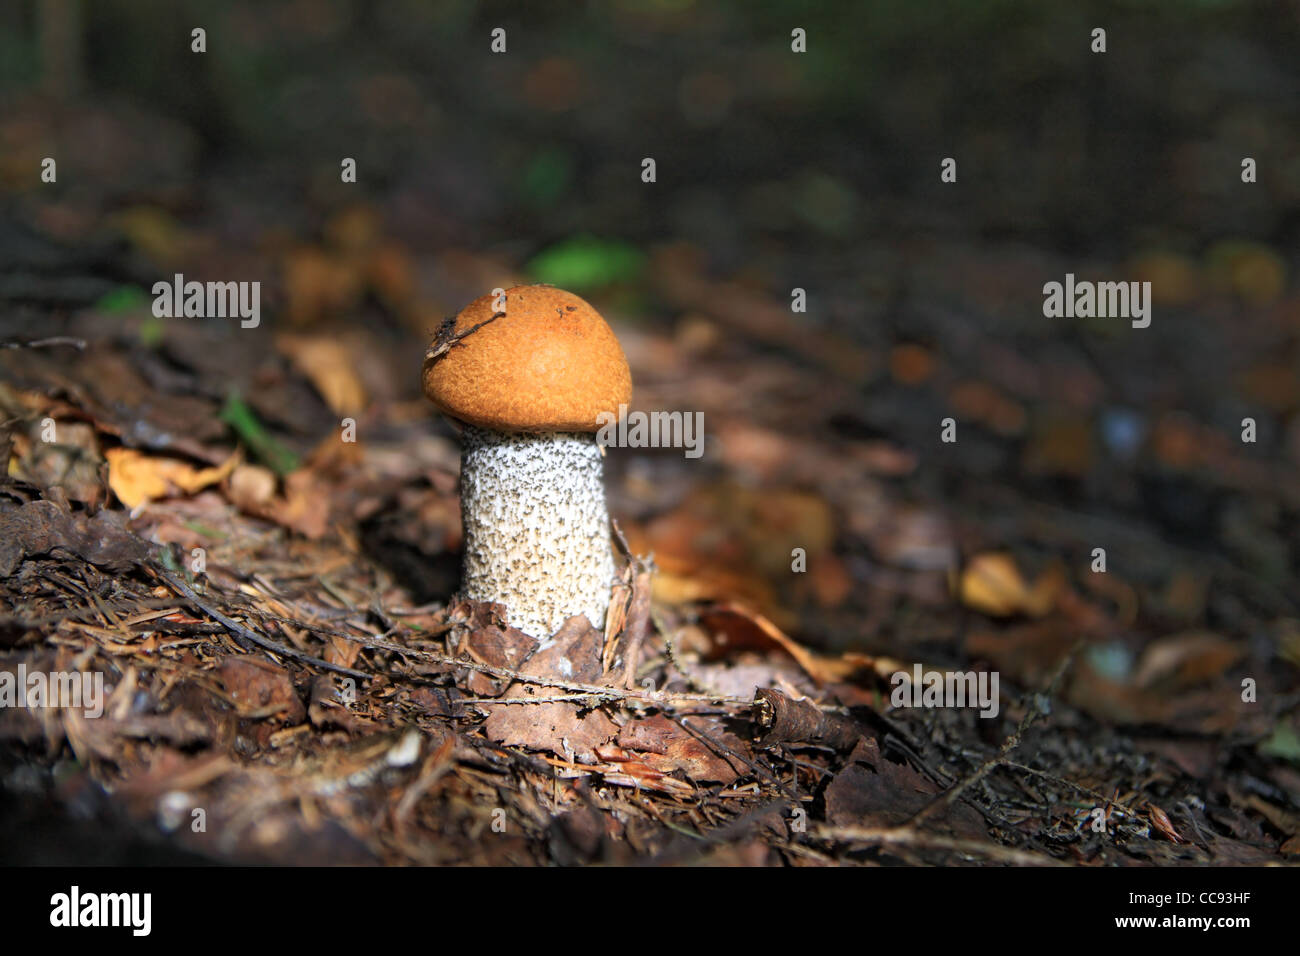 edible mushroom in dark wood Stock Photo